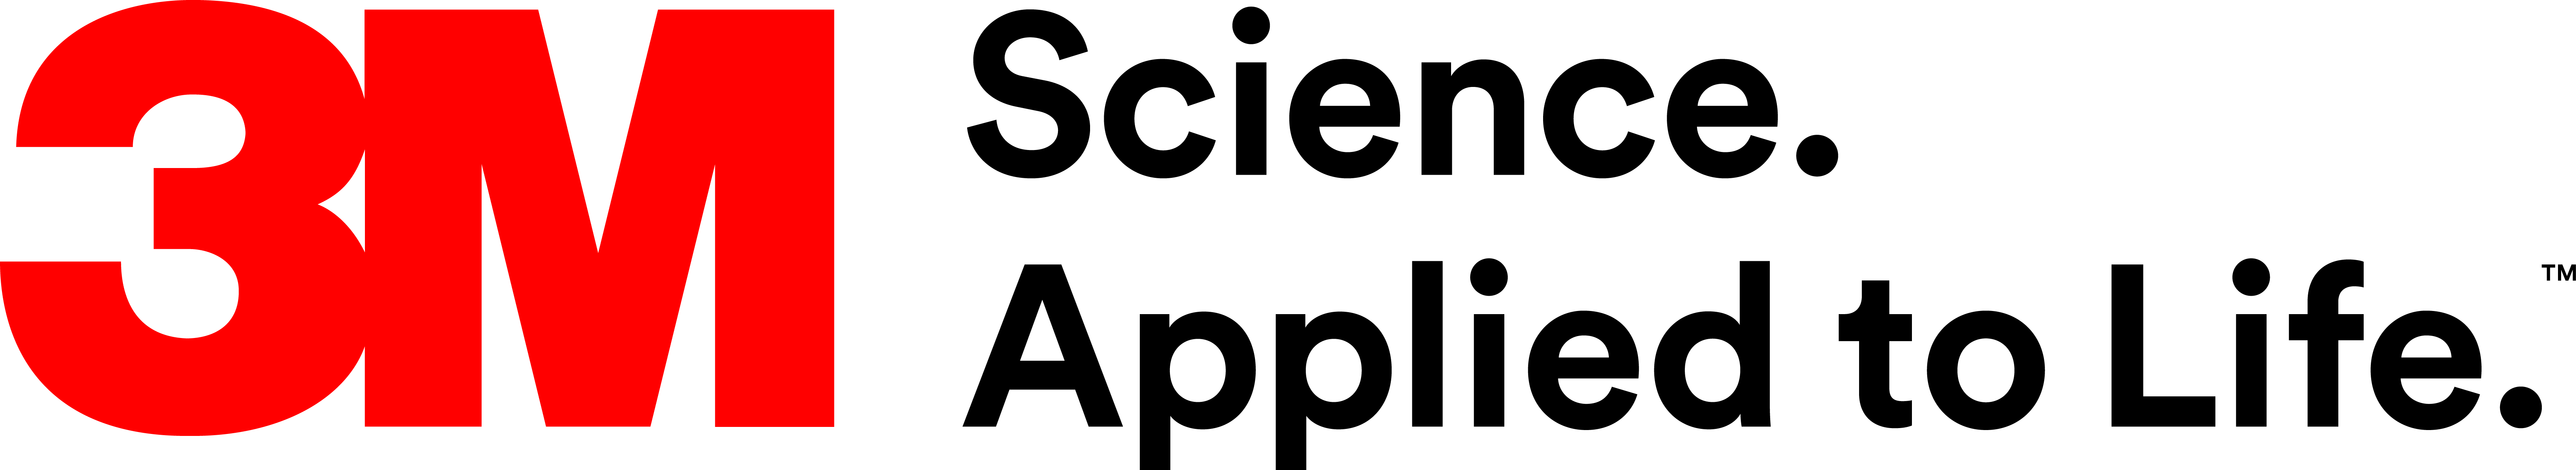 3m science png logo #5128